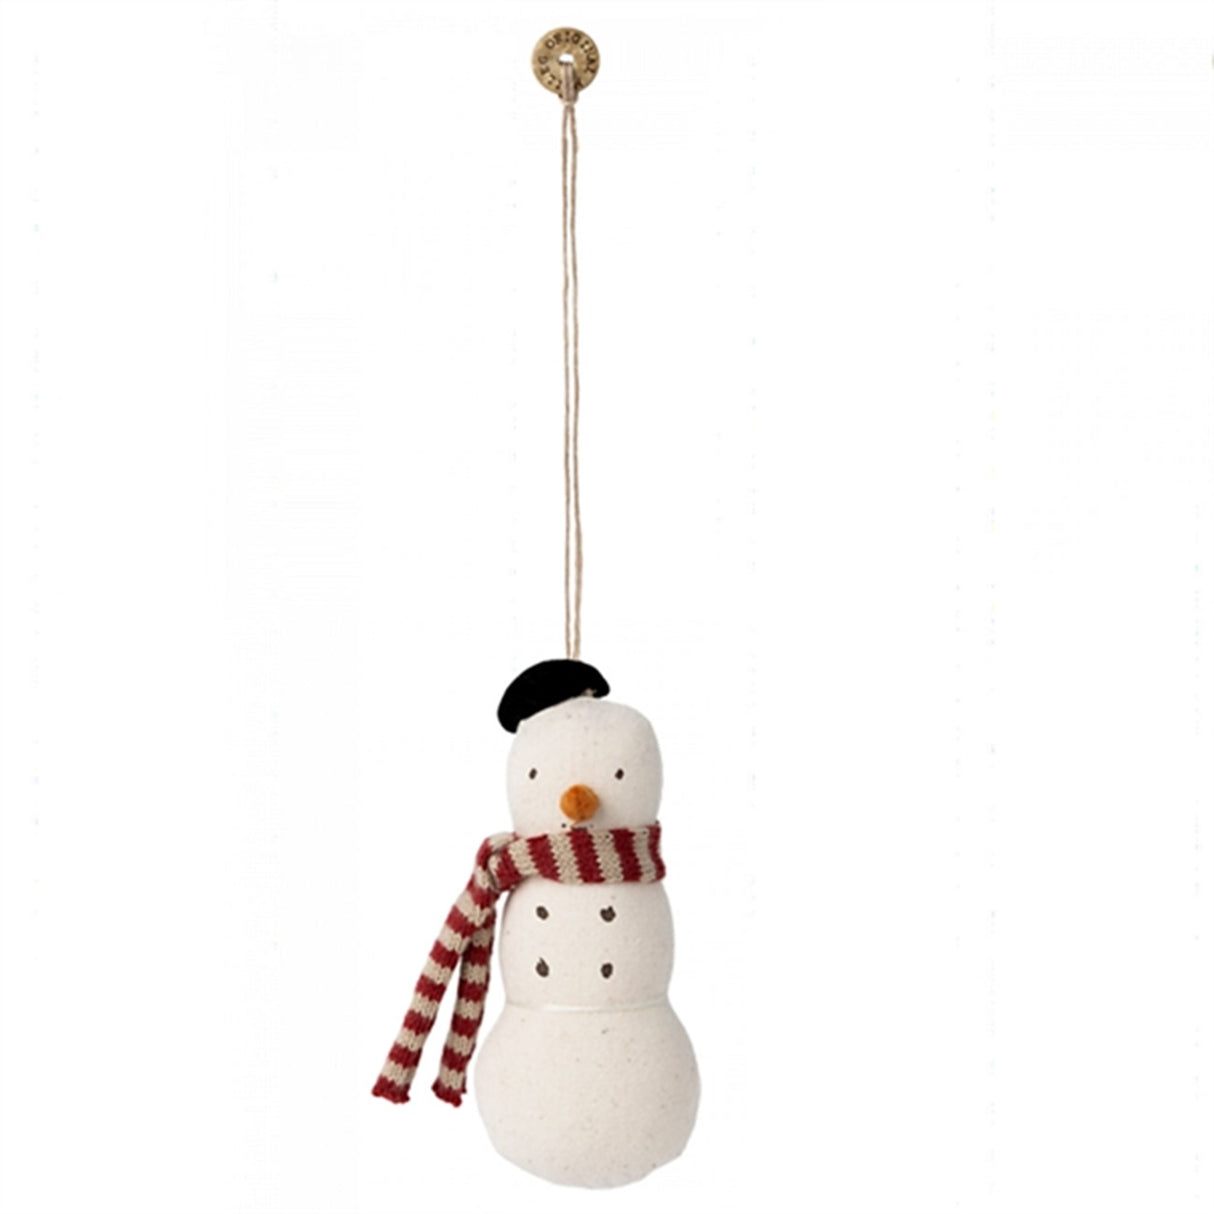 Maileg Snowman Ornament, Scarf